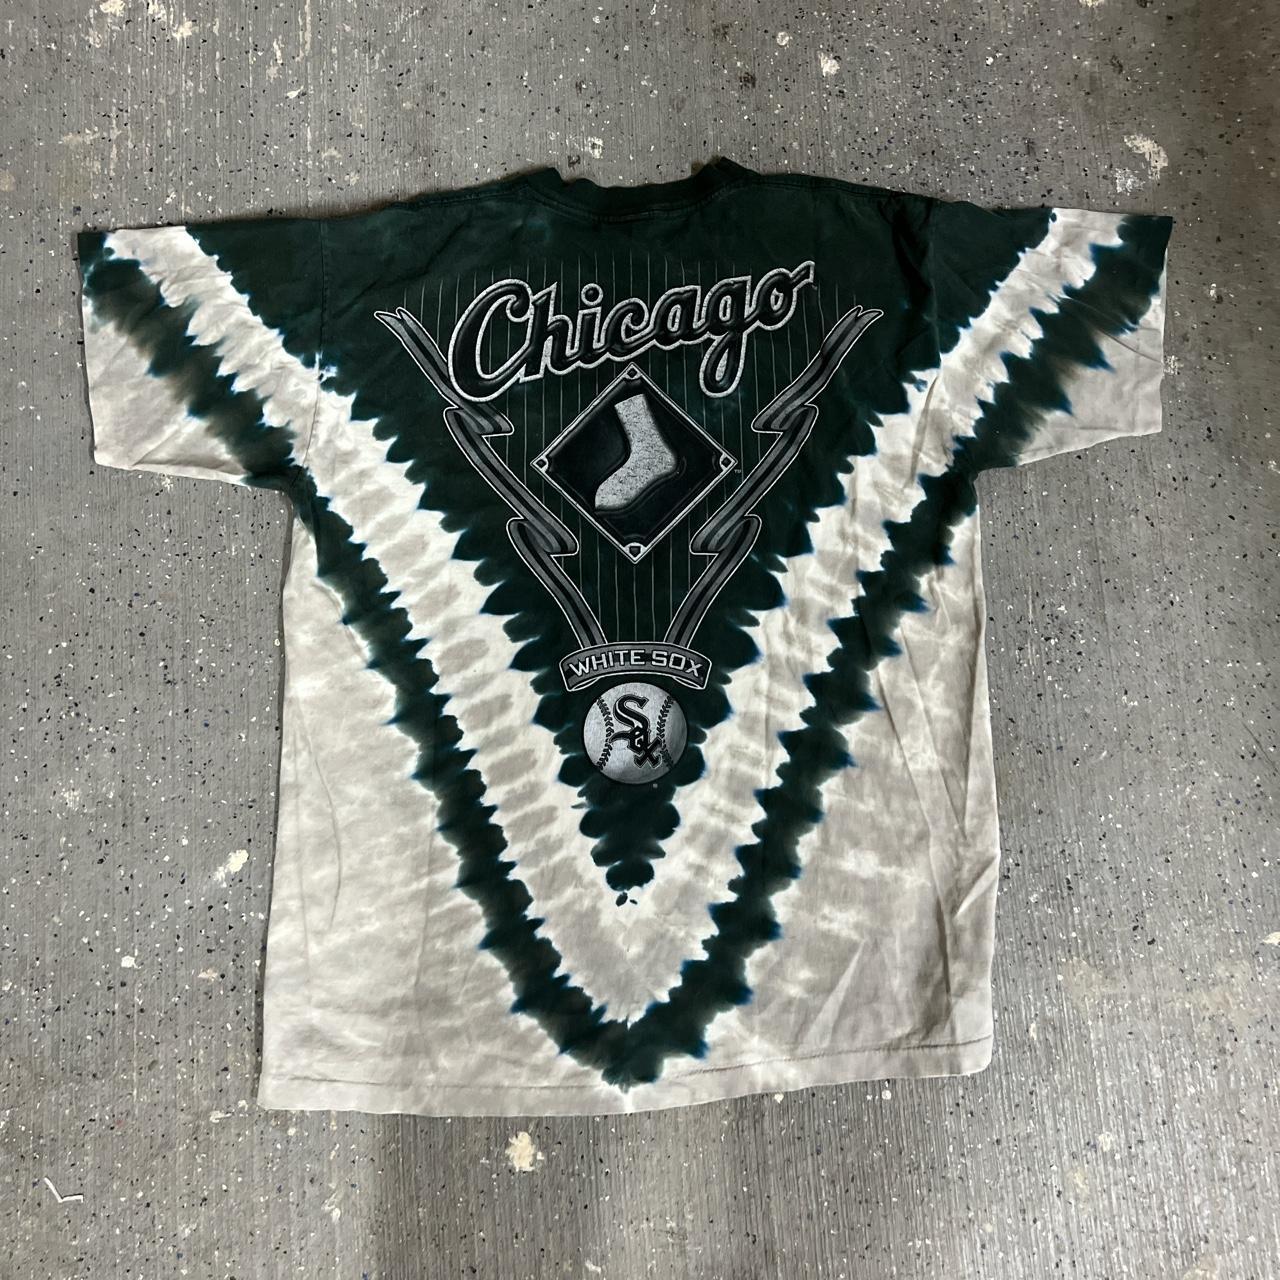 Vintage Chicago white sox tie dye - Depop